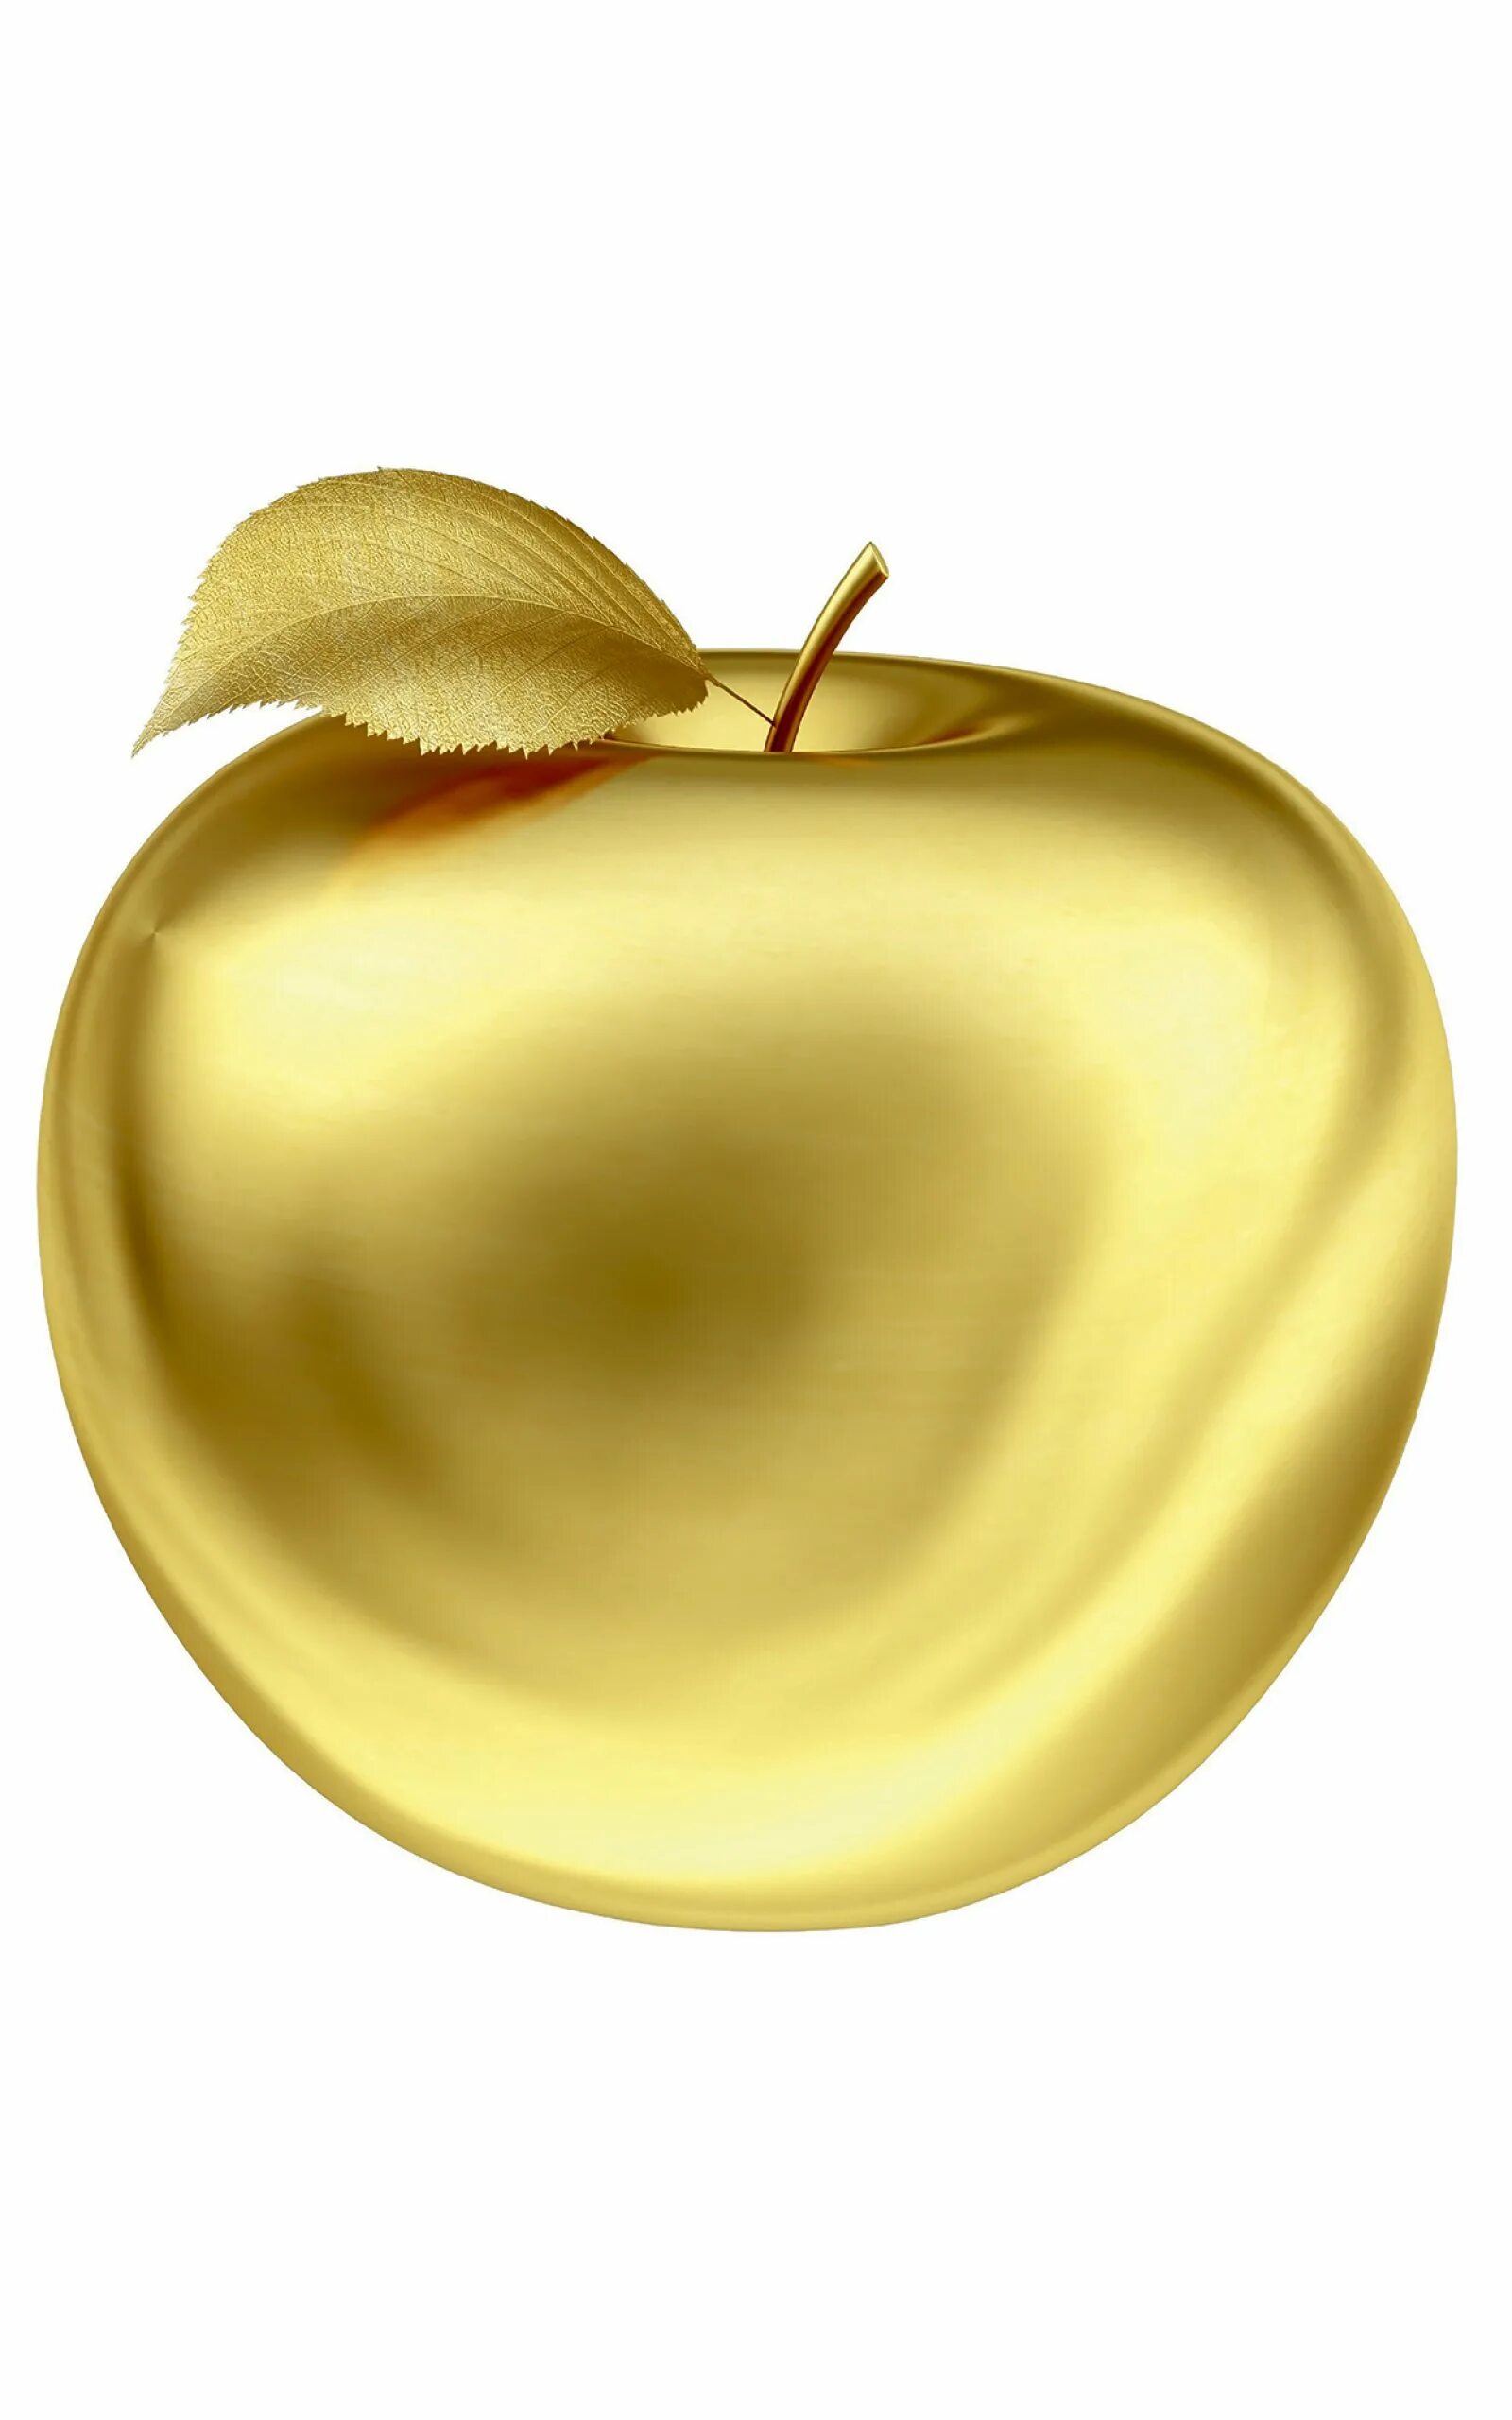 Золотое яблоко. Яблоко на прозрачном фоне. Яблоко на золотом фоне. Маленькие золотые яблочки. Appel de